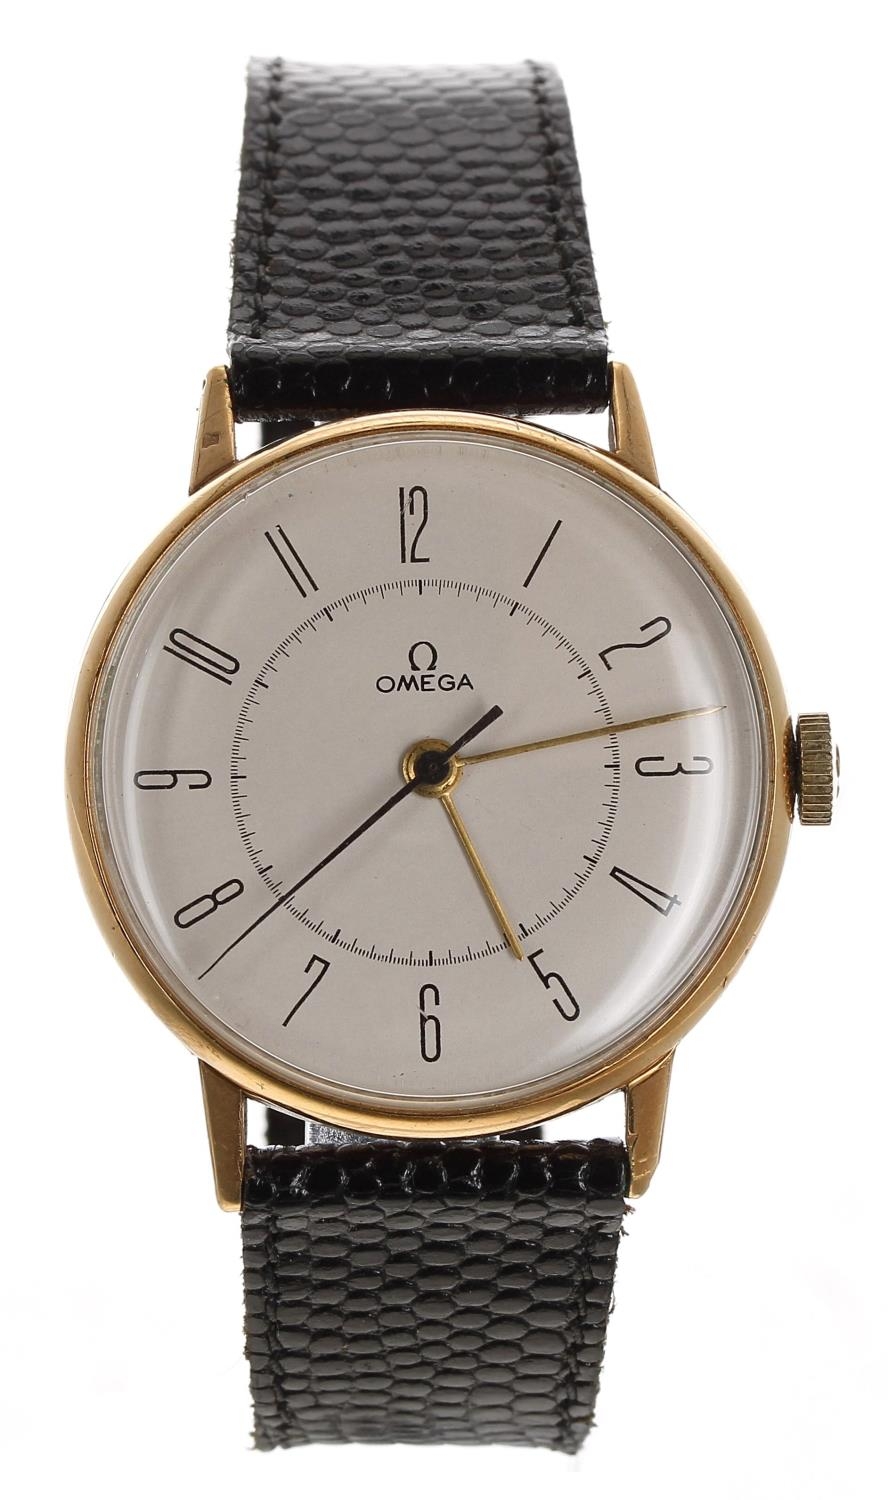 Omega gold plated gentleman's wristwatch, case no. 10477575, serial no. 9952xxx, circa 1940's,